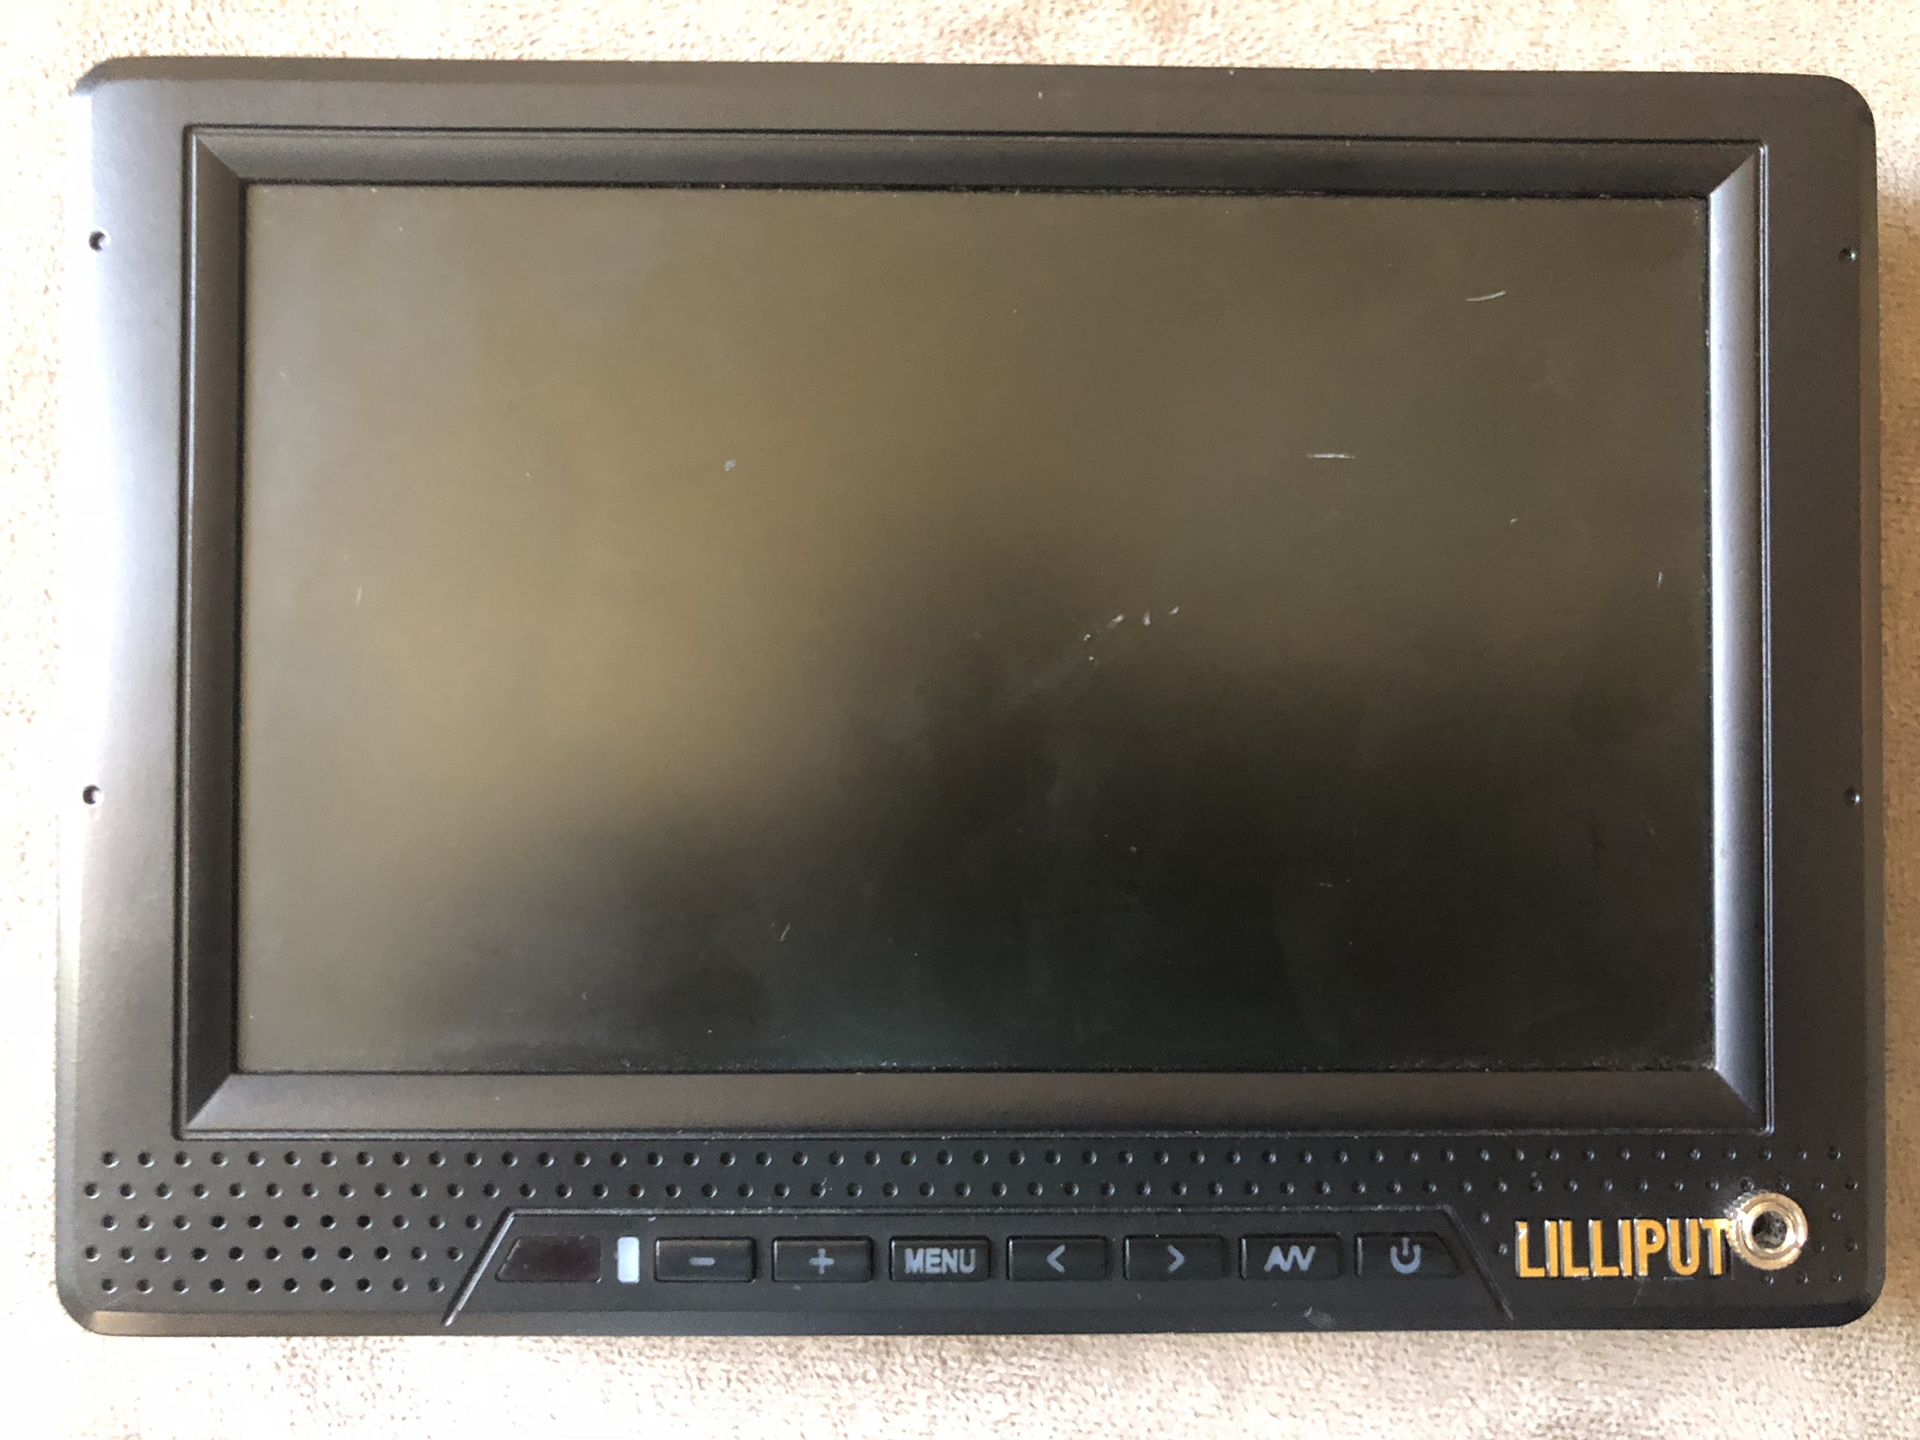 Lilliput 7’ camera monitor